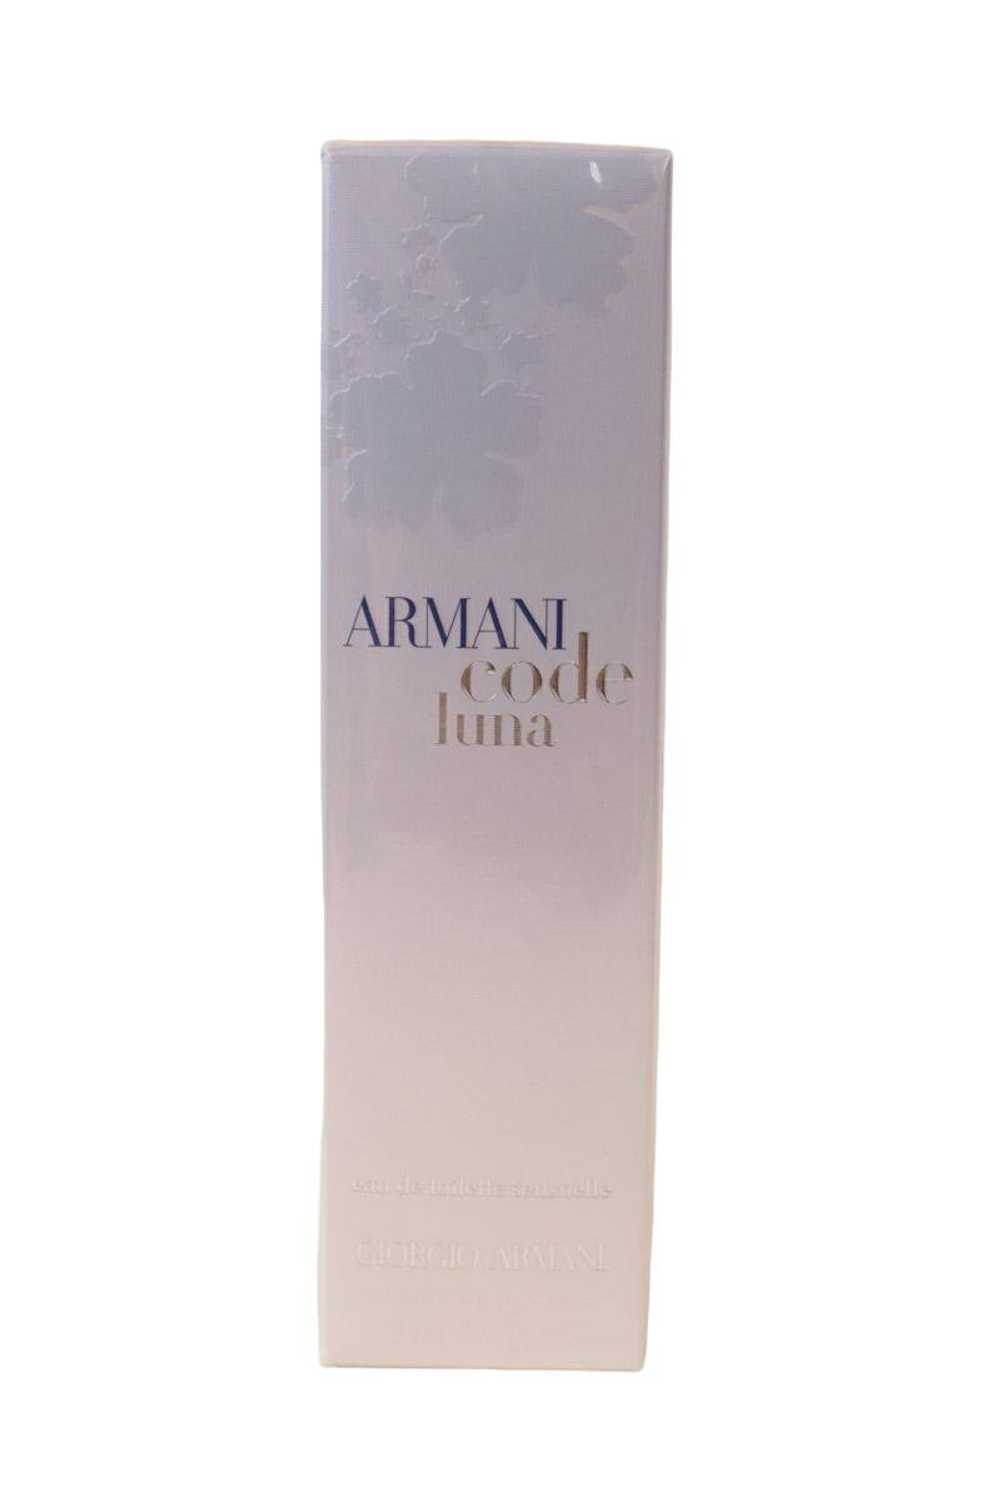 Circular Clothing Parfum Armani gris. 75ml. - image 1